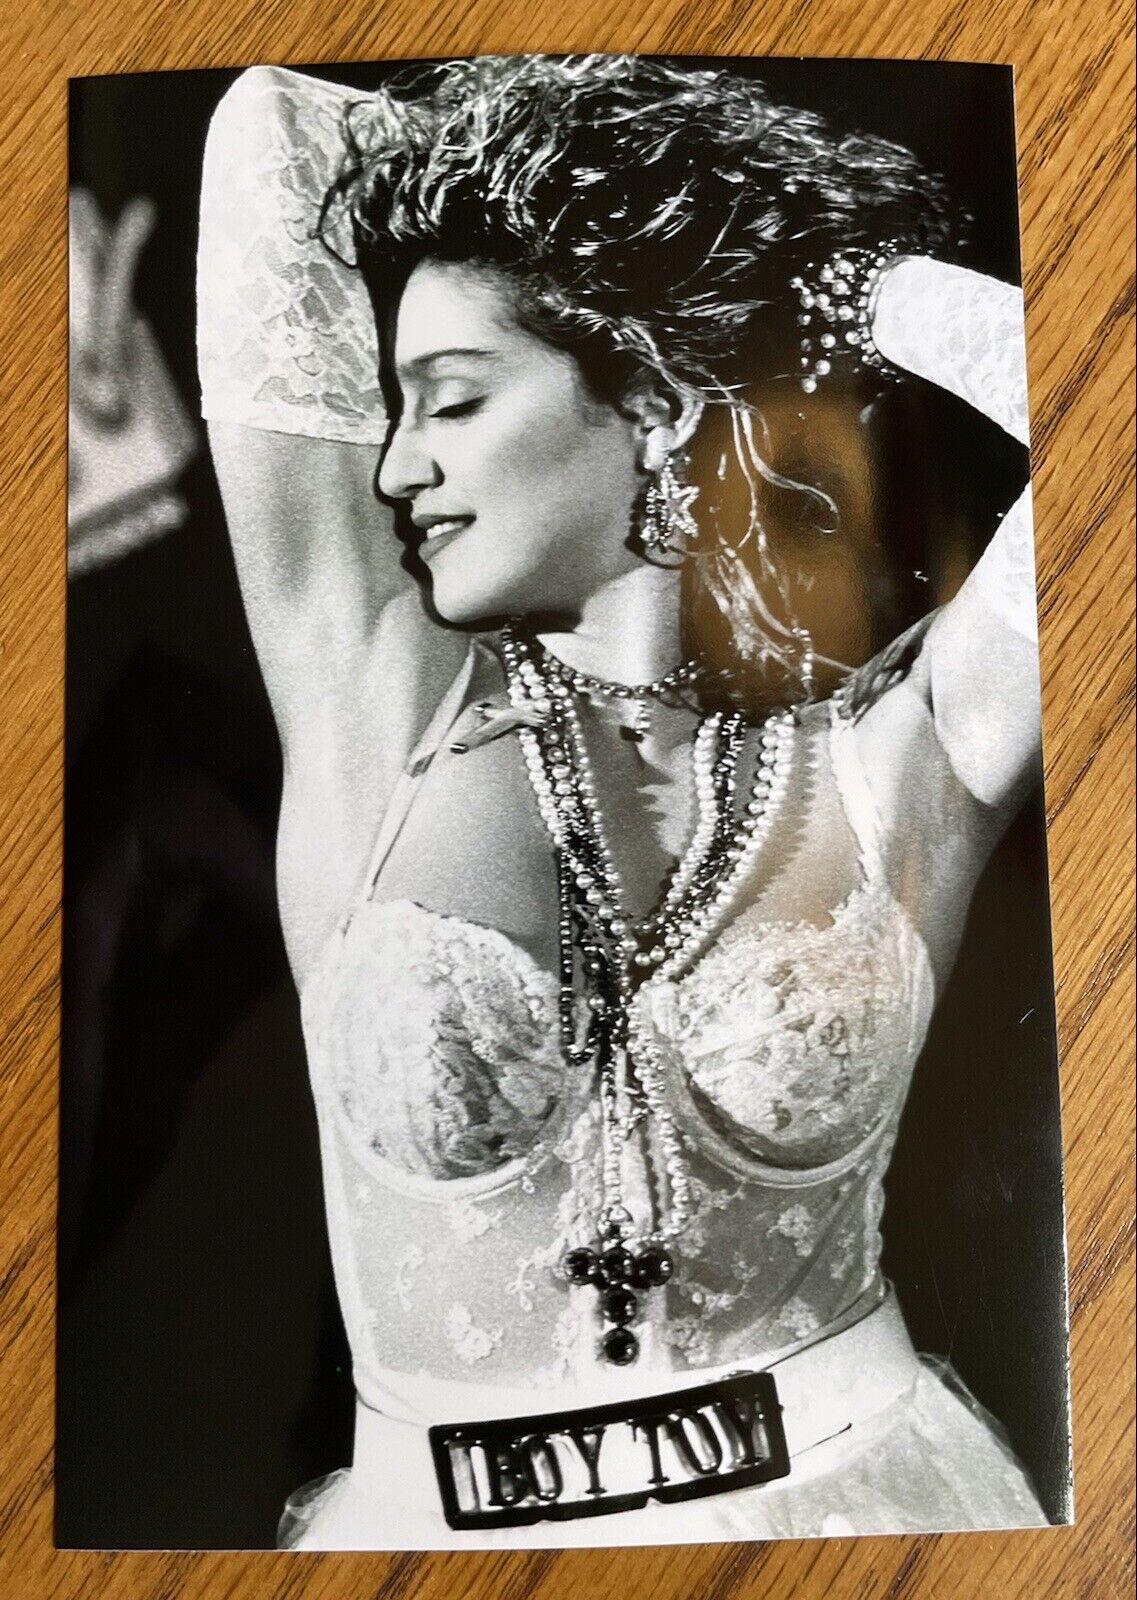 Madonna "1980s Music Icon" Like A Virgin 4x6 Bw Glossy Photo, Music Sensation!